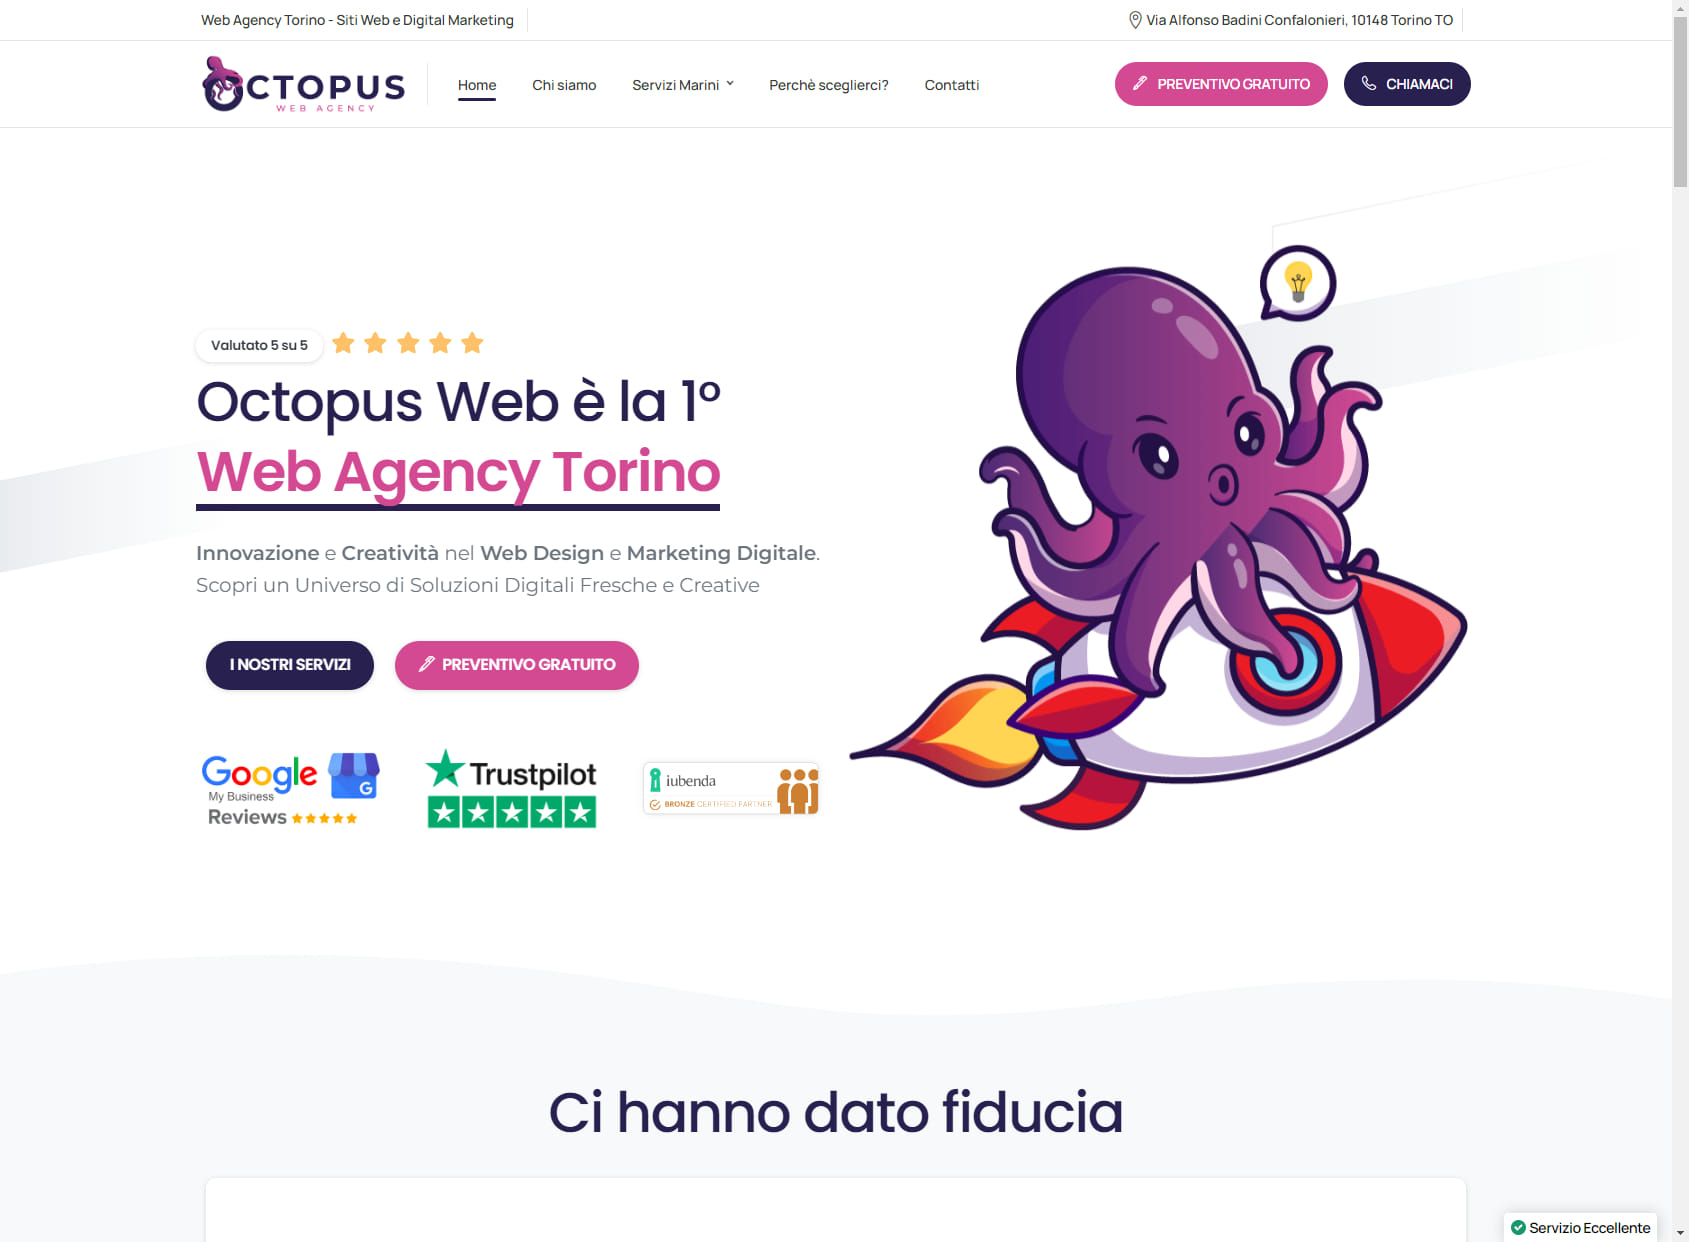 Octopus Web - Web Agency Torino - Siti Web e Digital Marketing